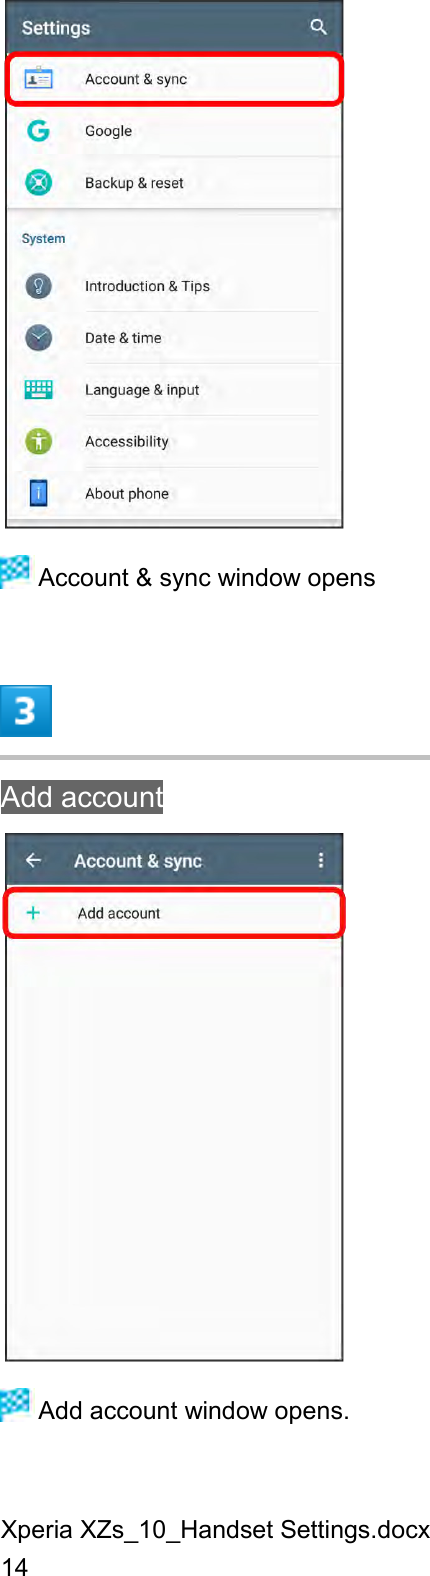 Xperia XZs_10_Handset Settings.docx 14   Account &amp; sync window opens  Add account   Add account window opens. 